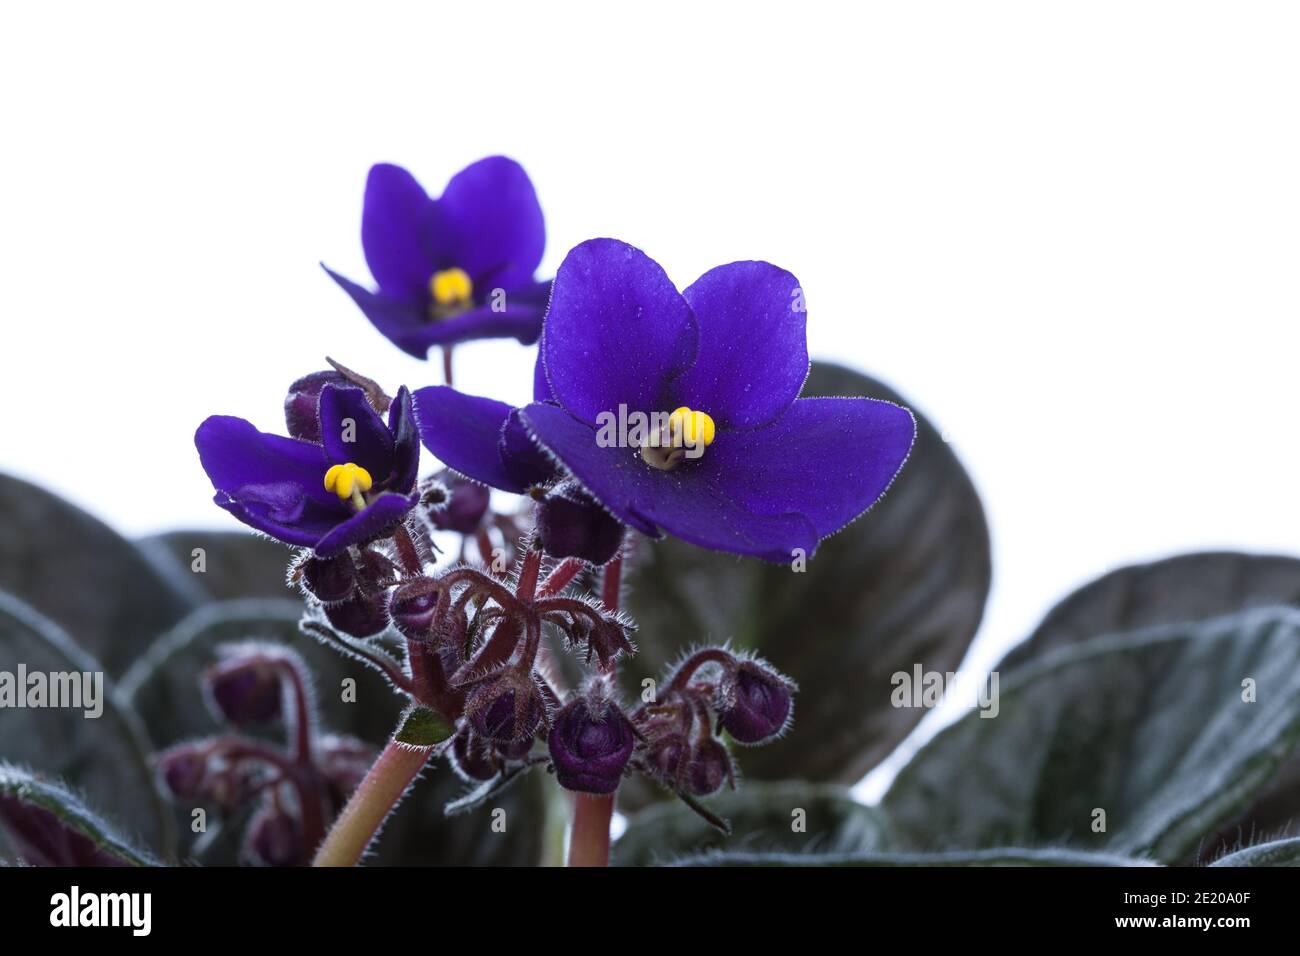 African Violet, Saintpaulia (Saintpaulia ionantha) Stock Photo